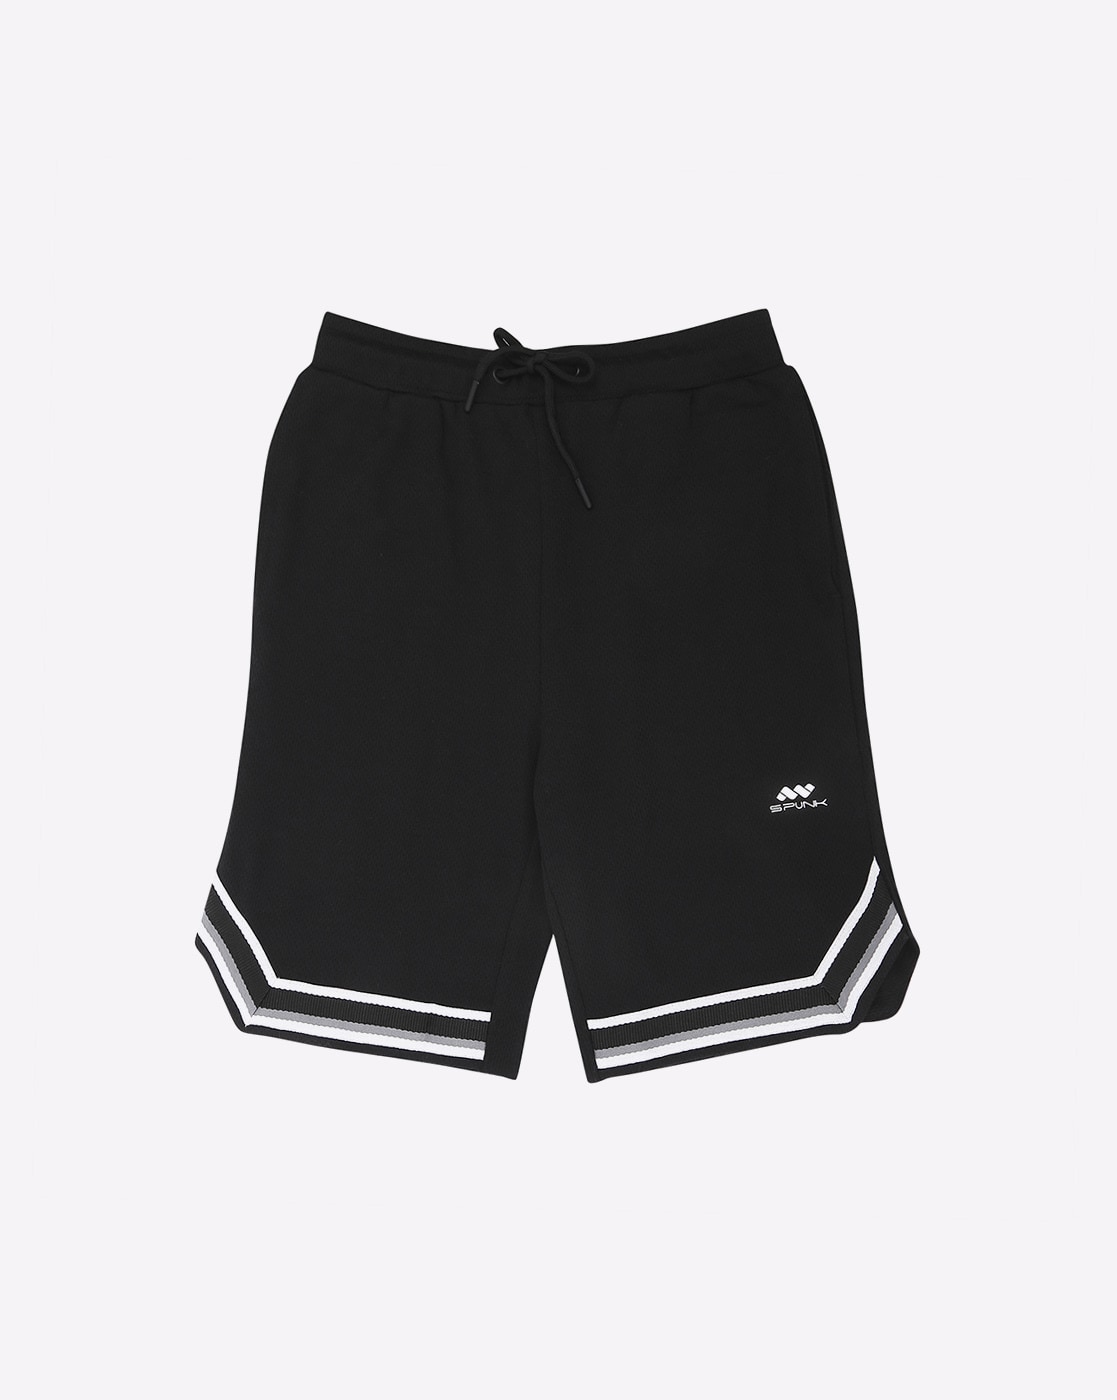 Buy Black Shorts for Boys by Spunk Online